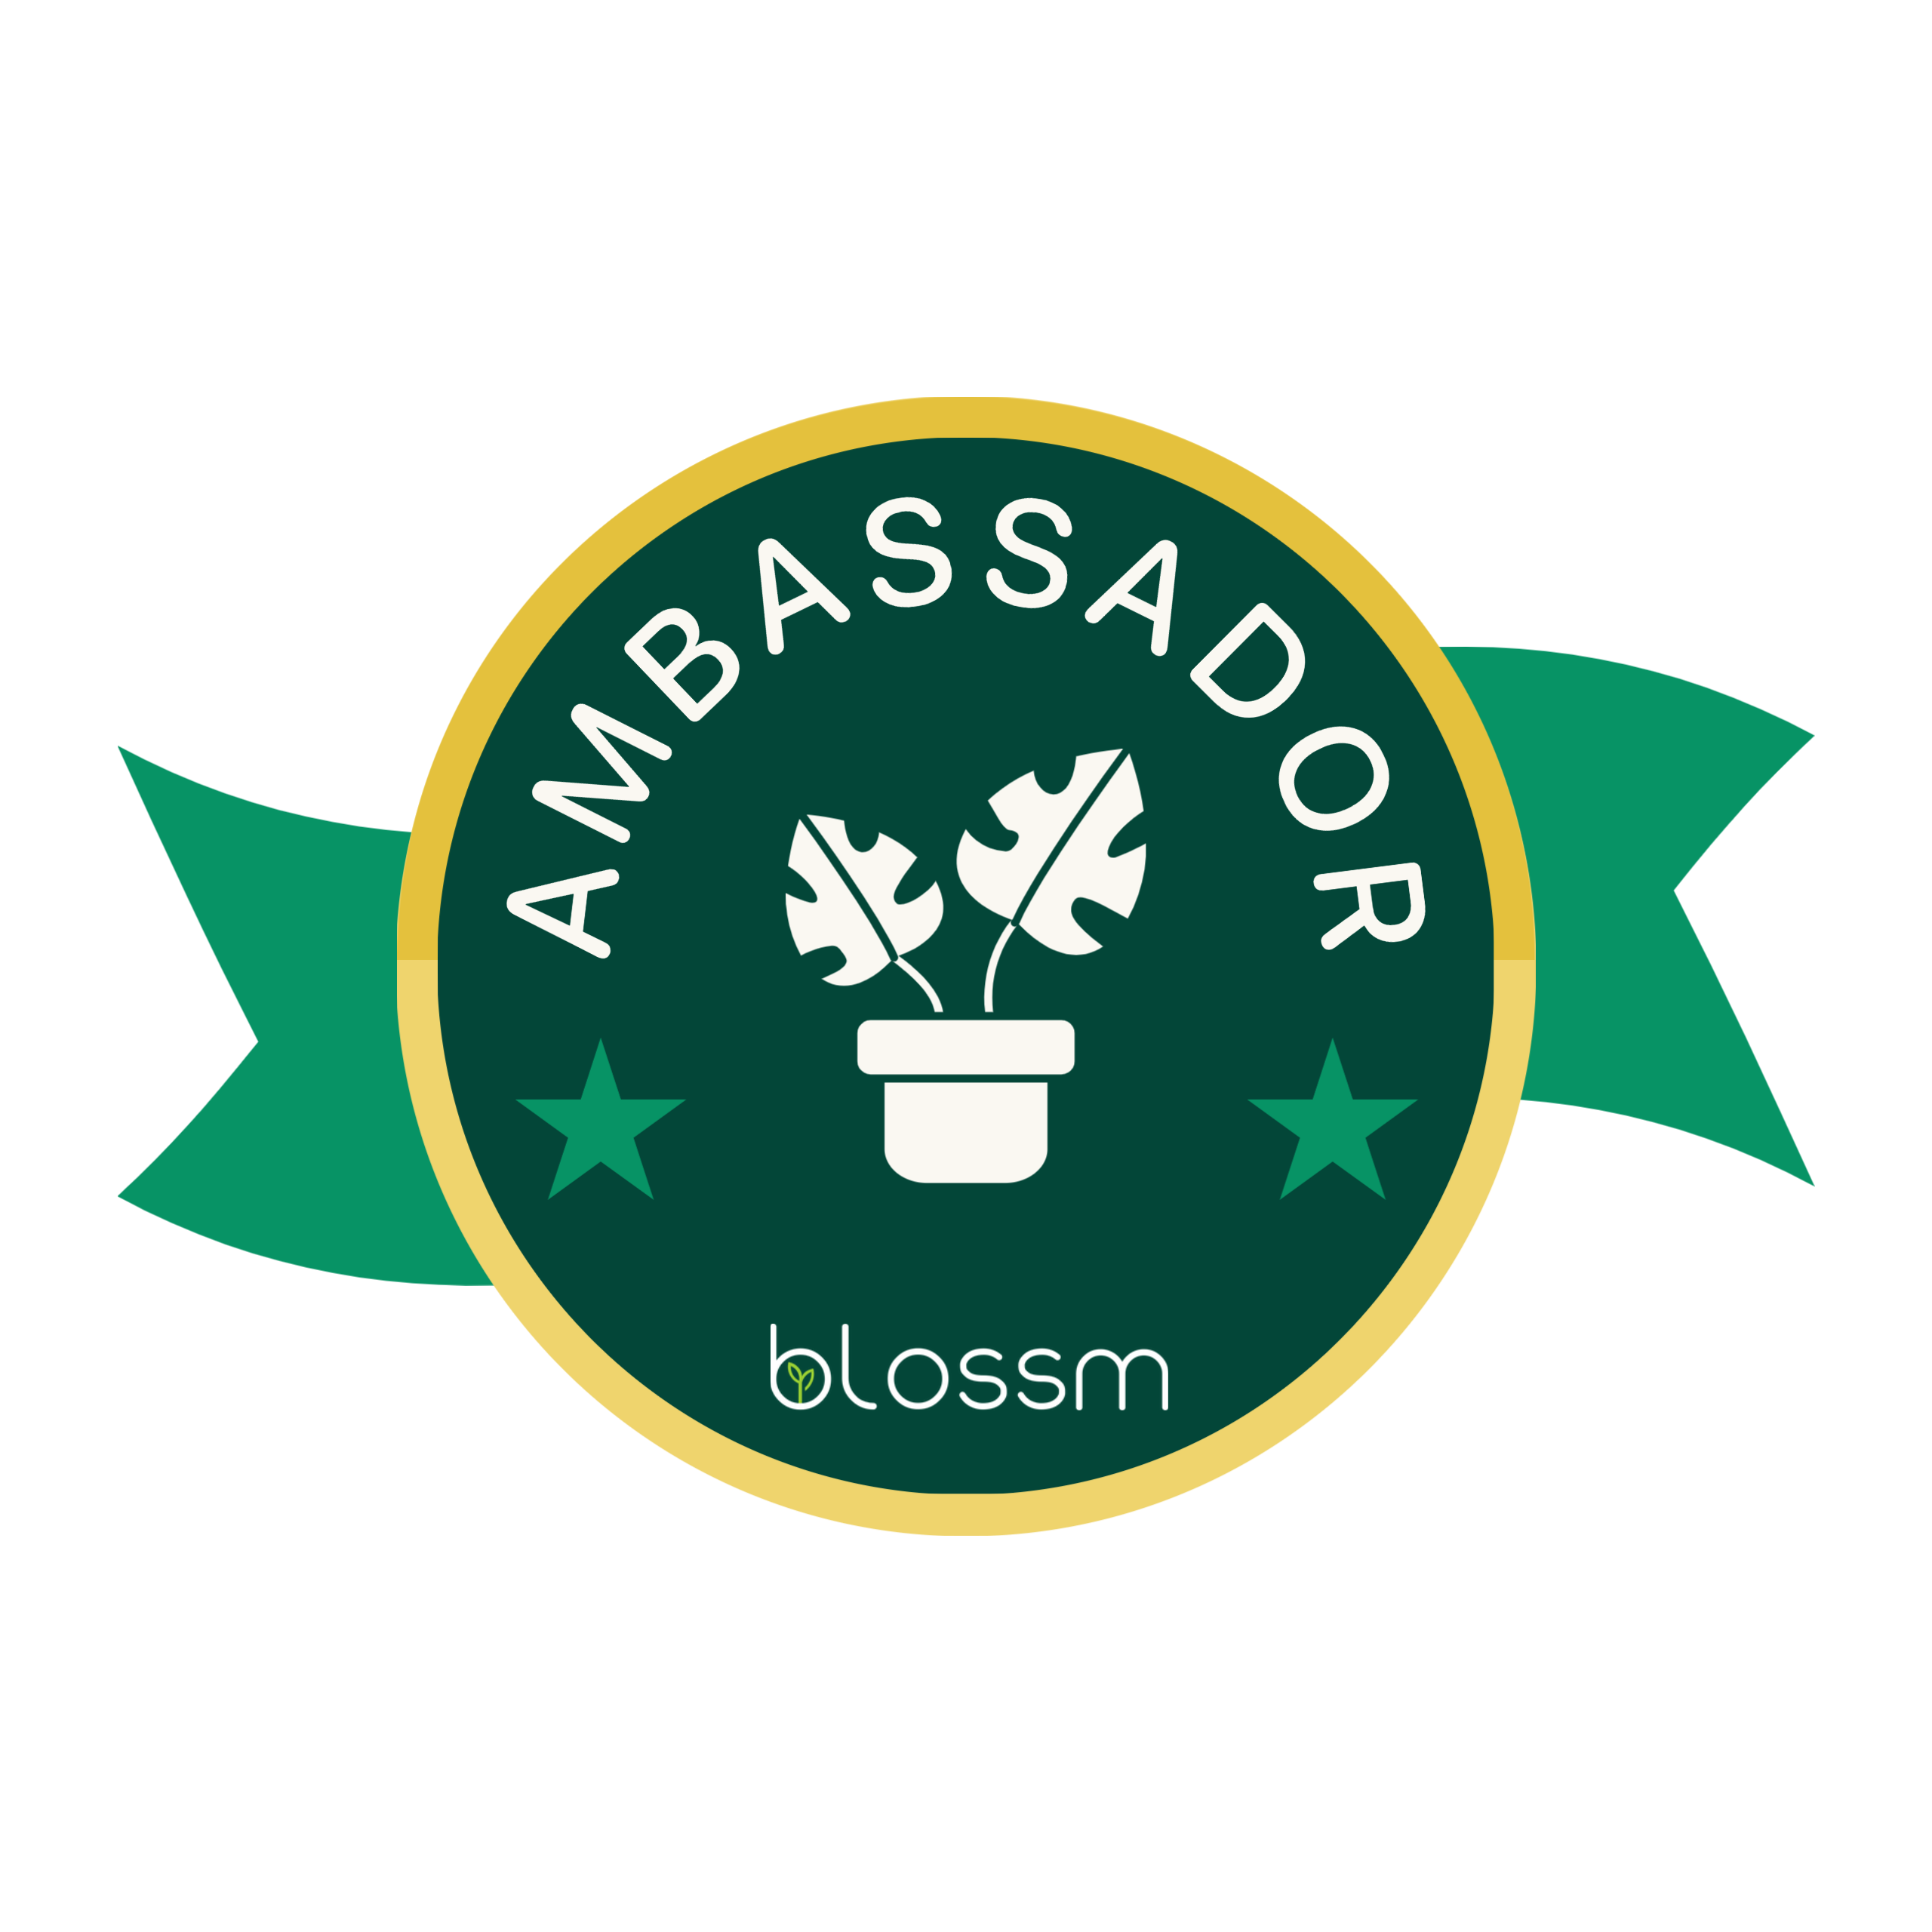 ambassador-badge